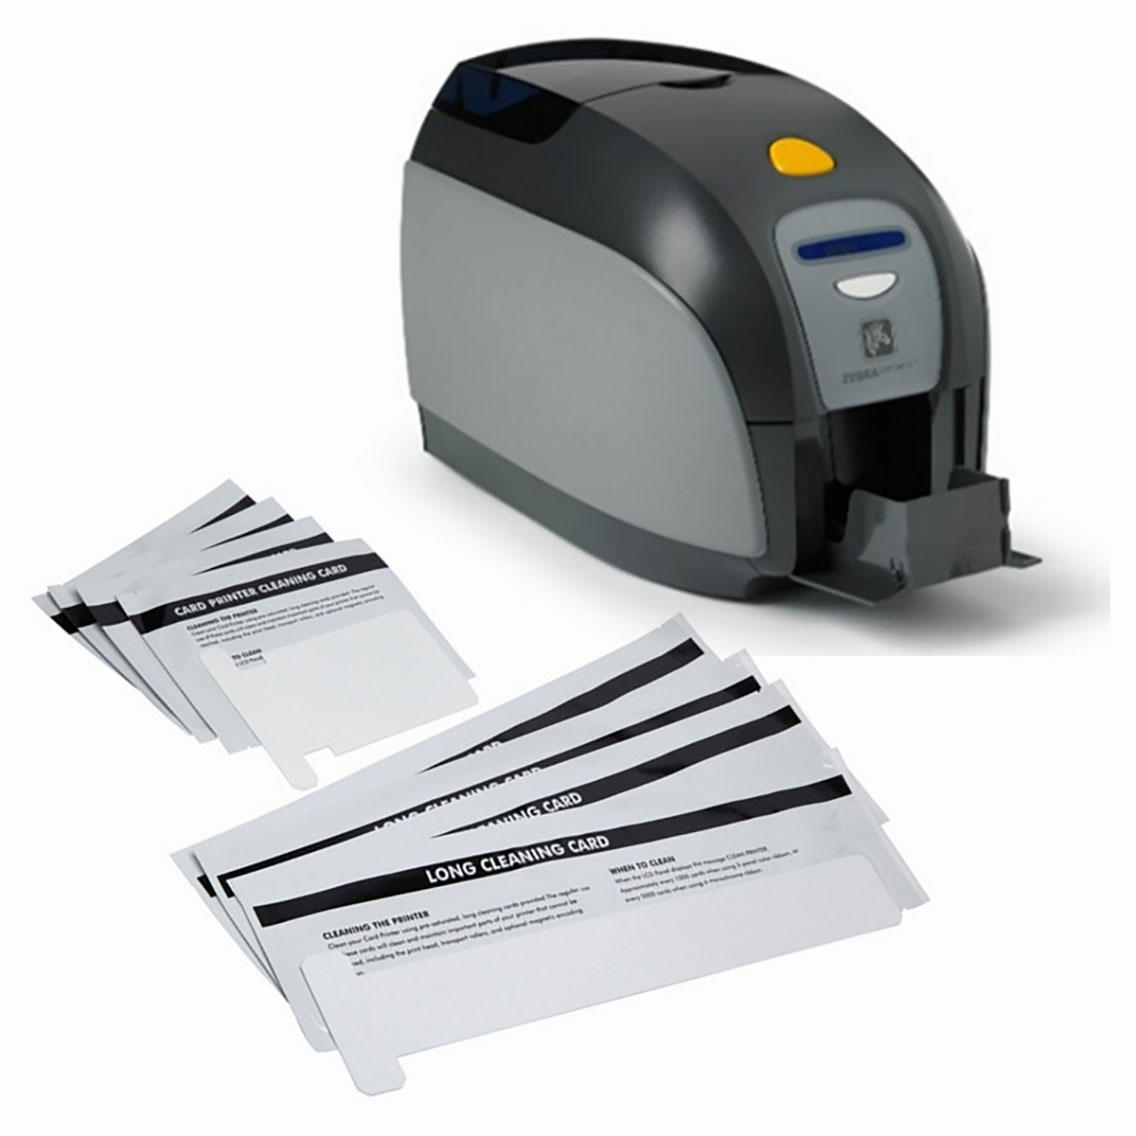 Cleanmo pvc zebra cleaning kit manufacturer for Zebra P120i printer